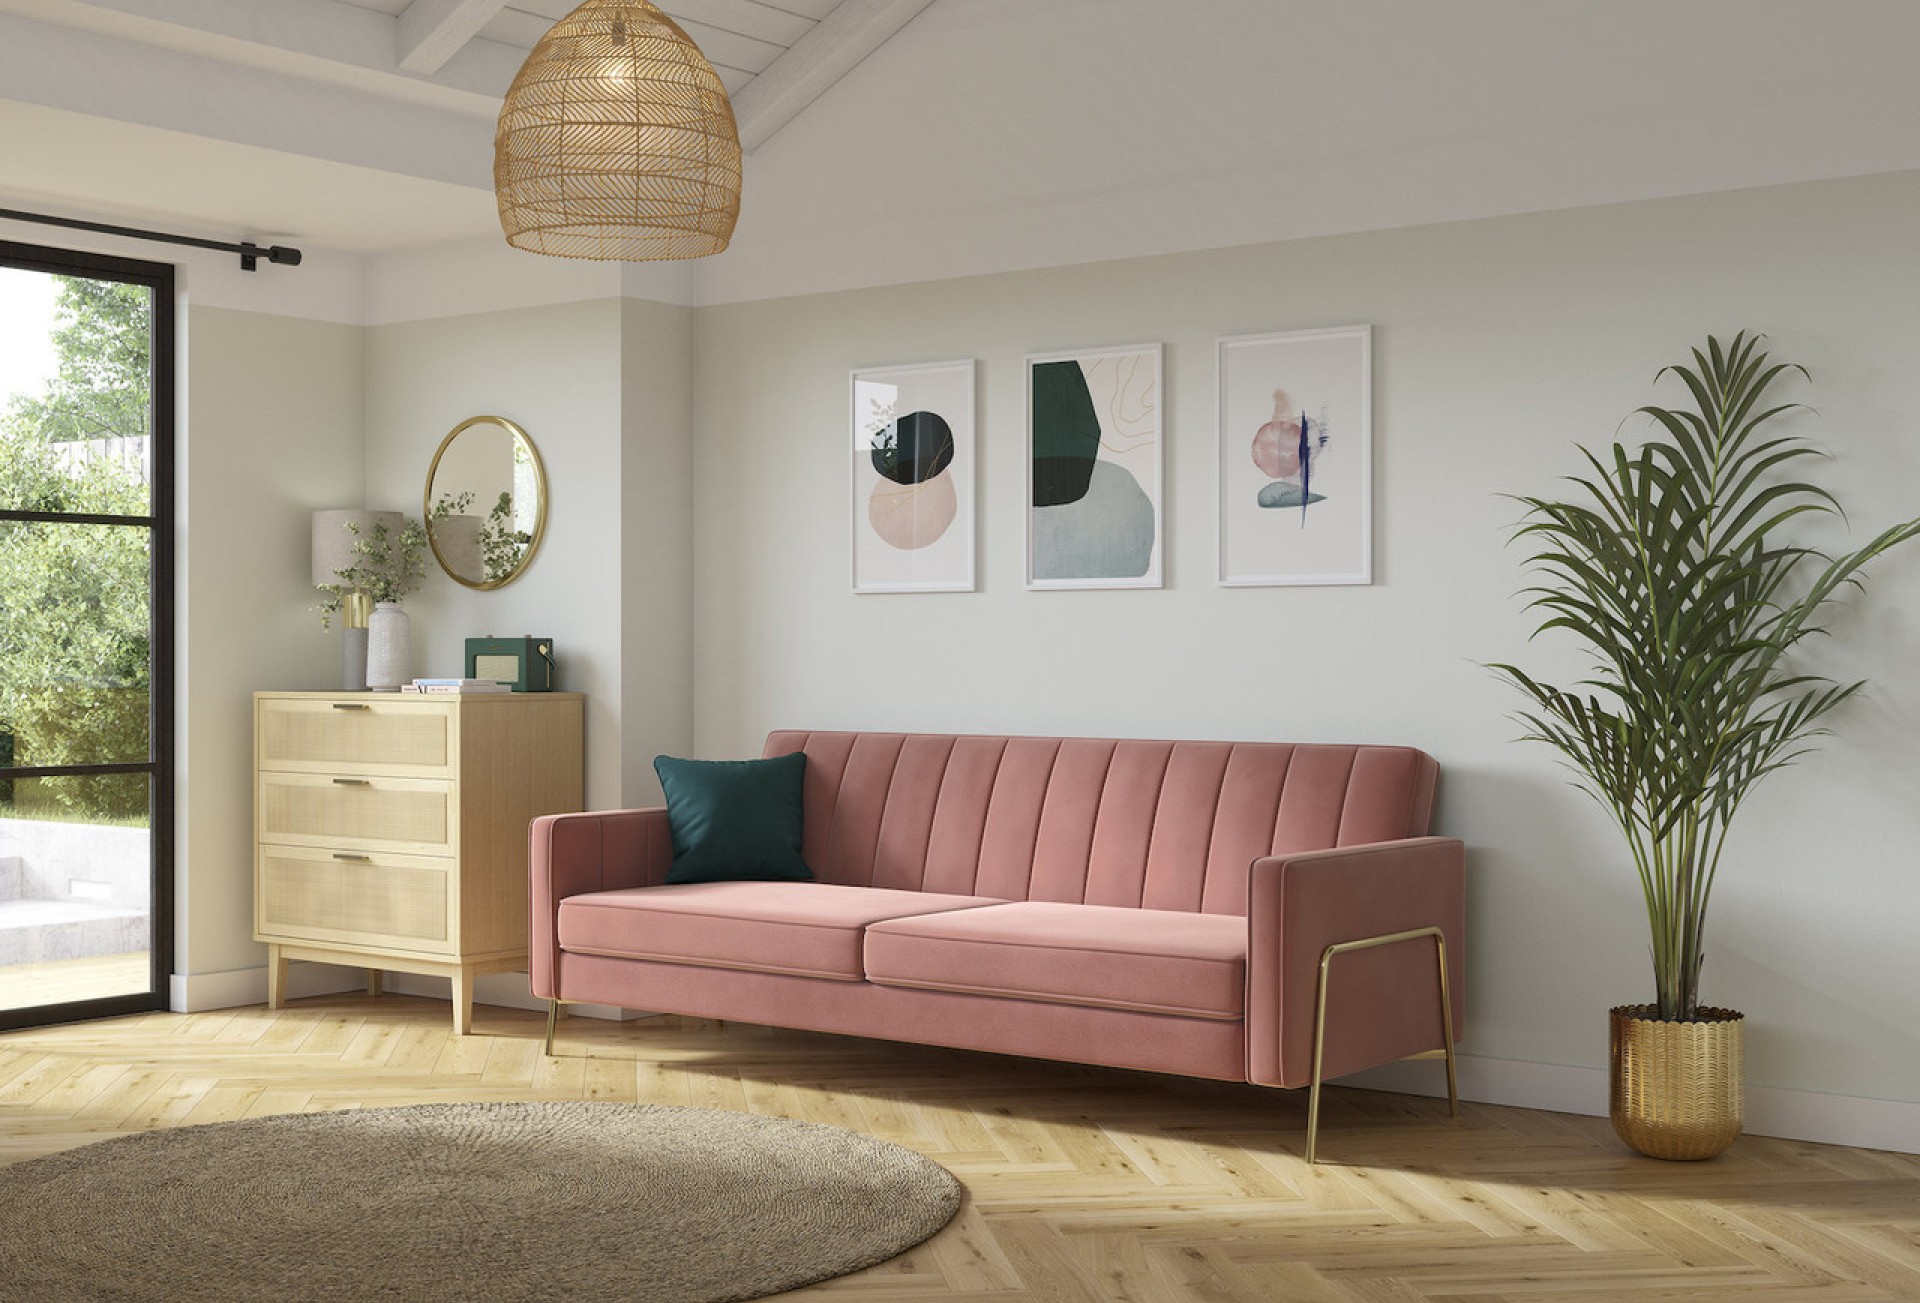 Black Friday Felicity sofa bed in rose pink deal